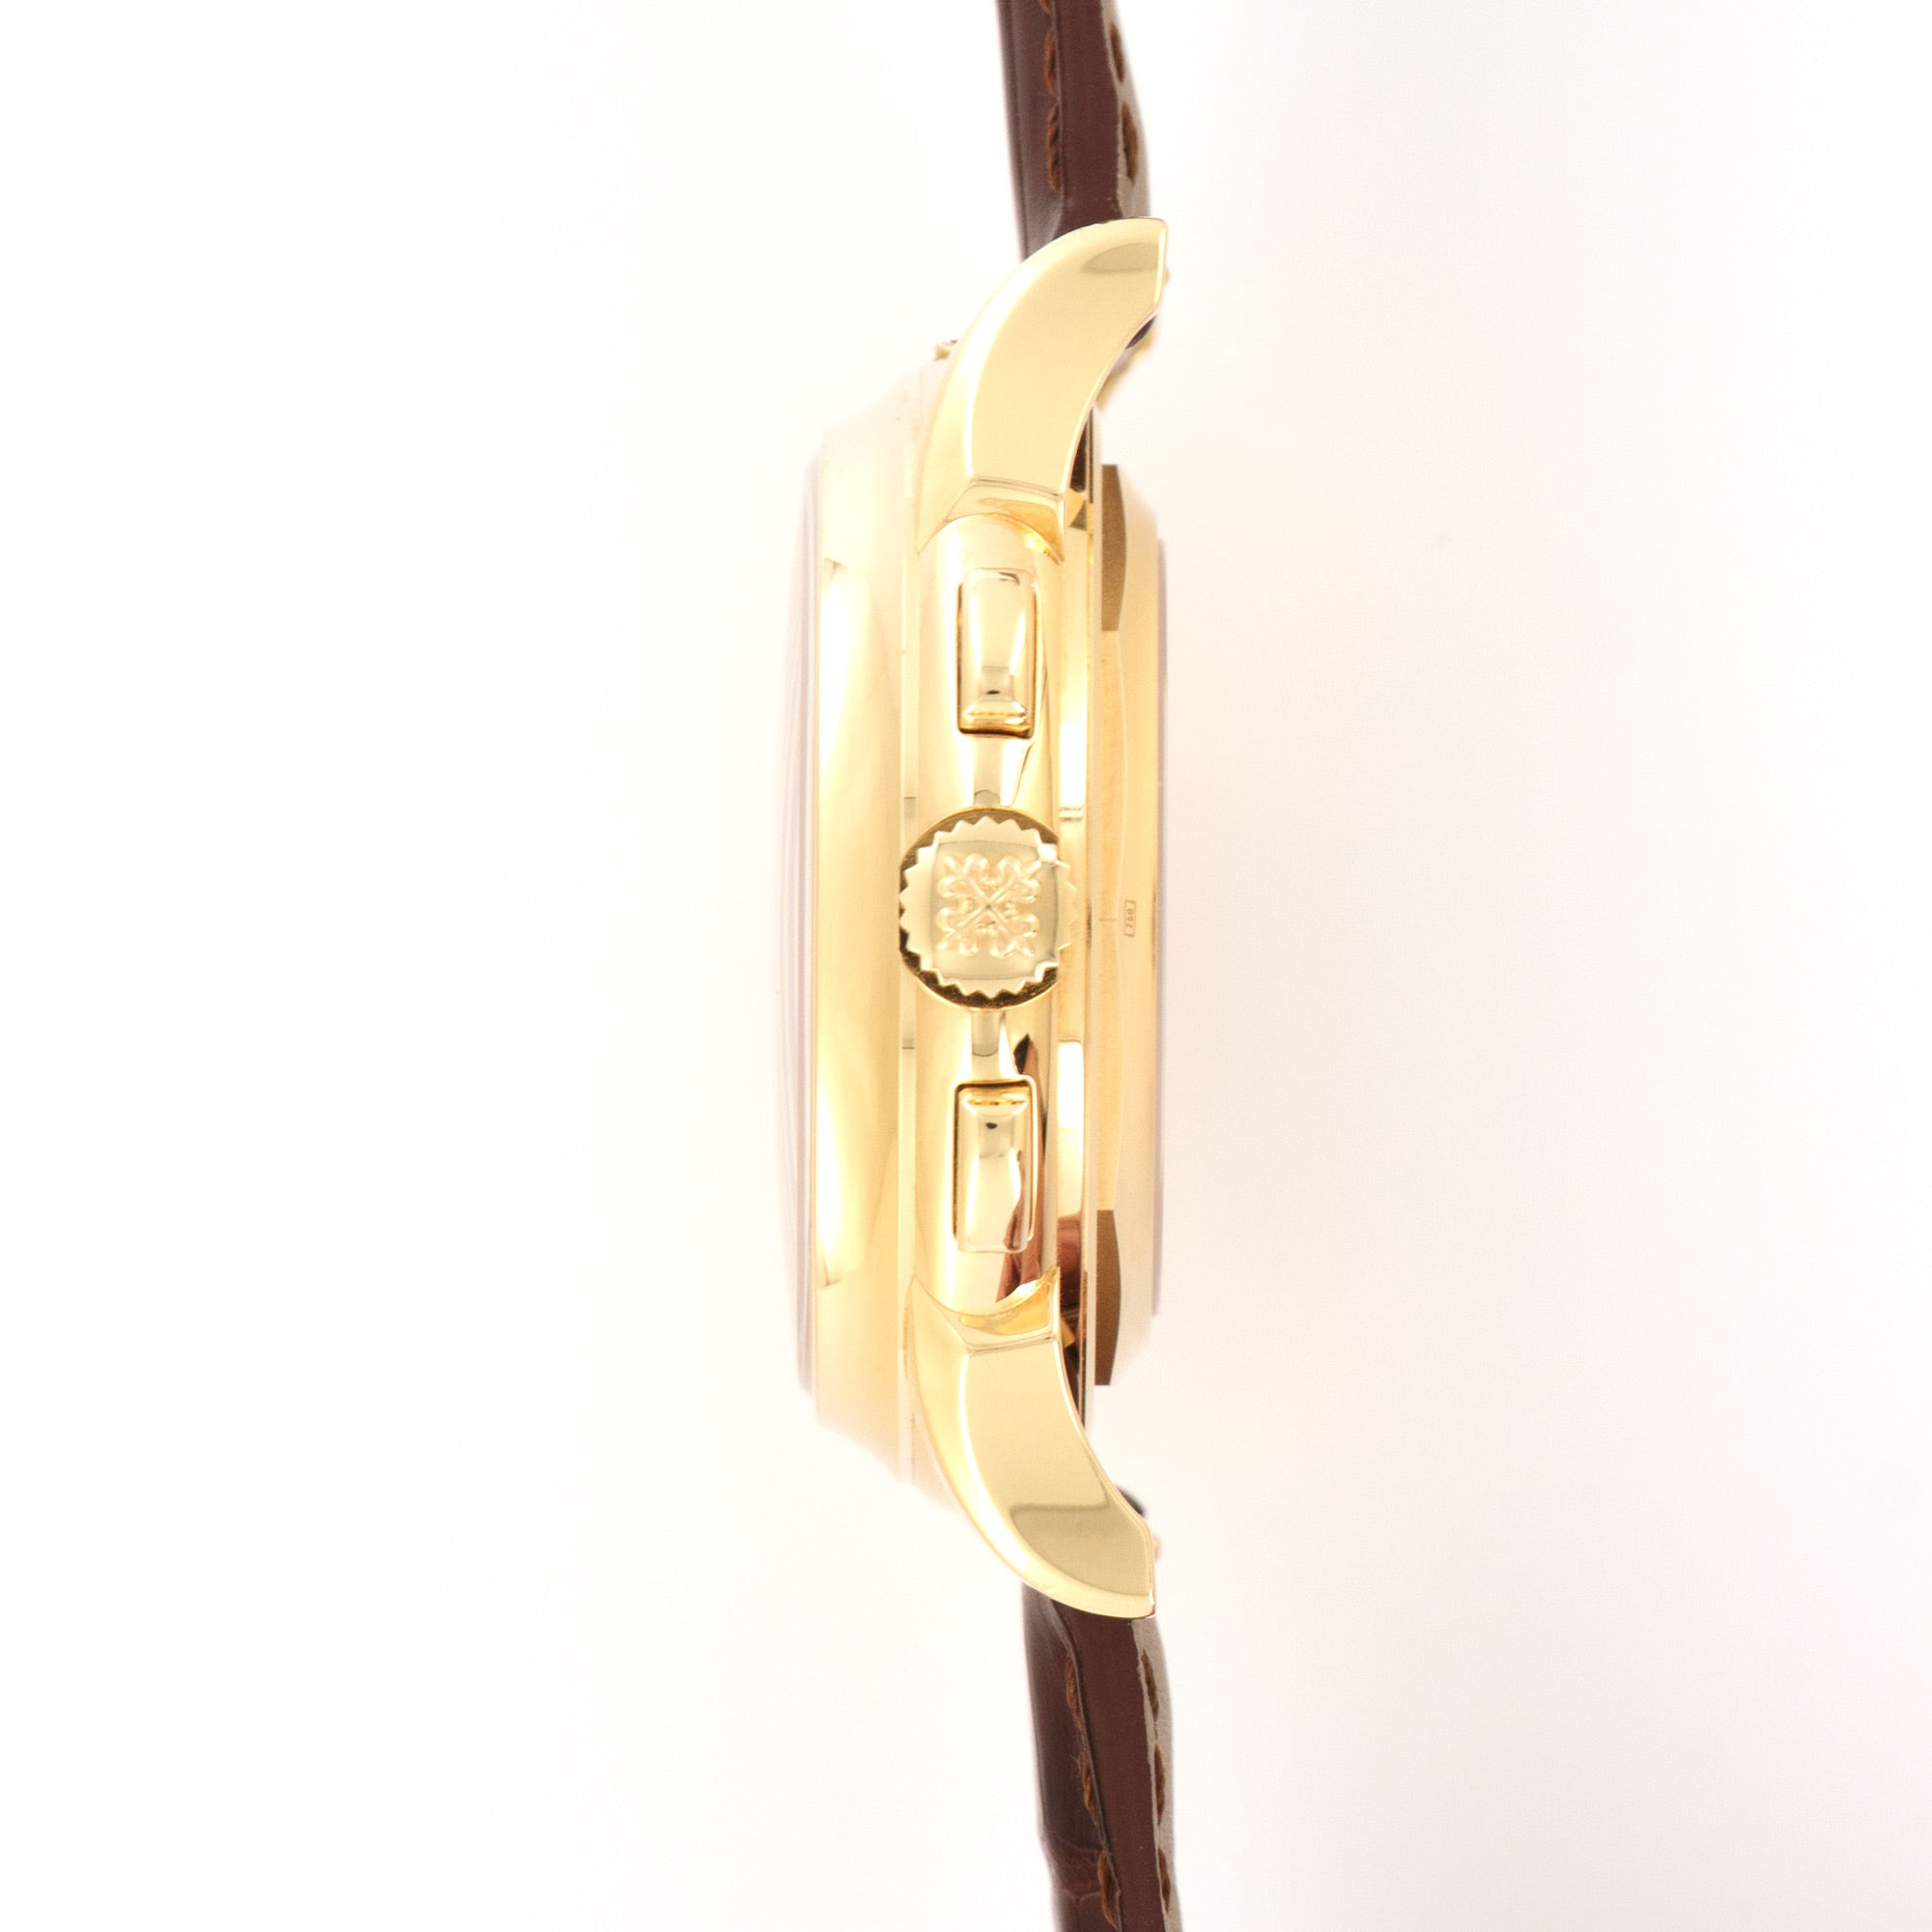 Patek Philippe - Patek Philippe Yellow Gold Perpetual Calendar Chrono Watch Ref. 5970 - The Keystone Watches